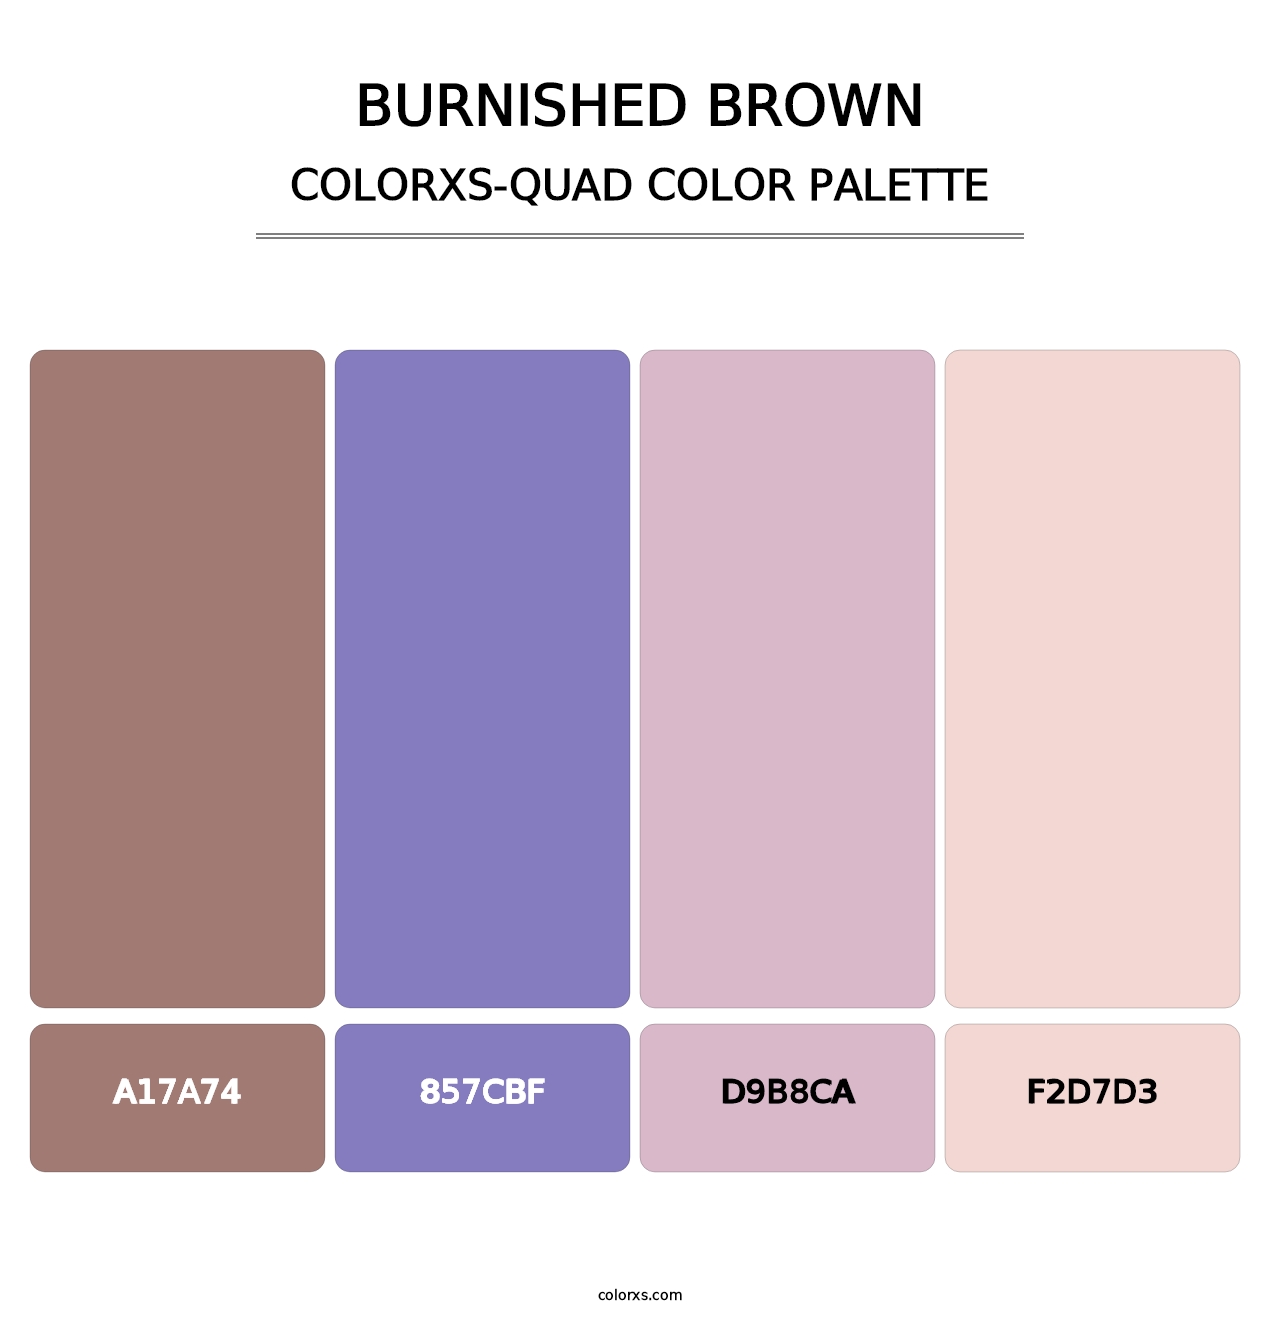 Burnished Brown - Colorxs Quad Palette